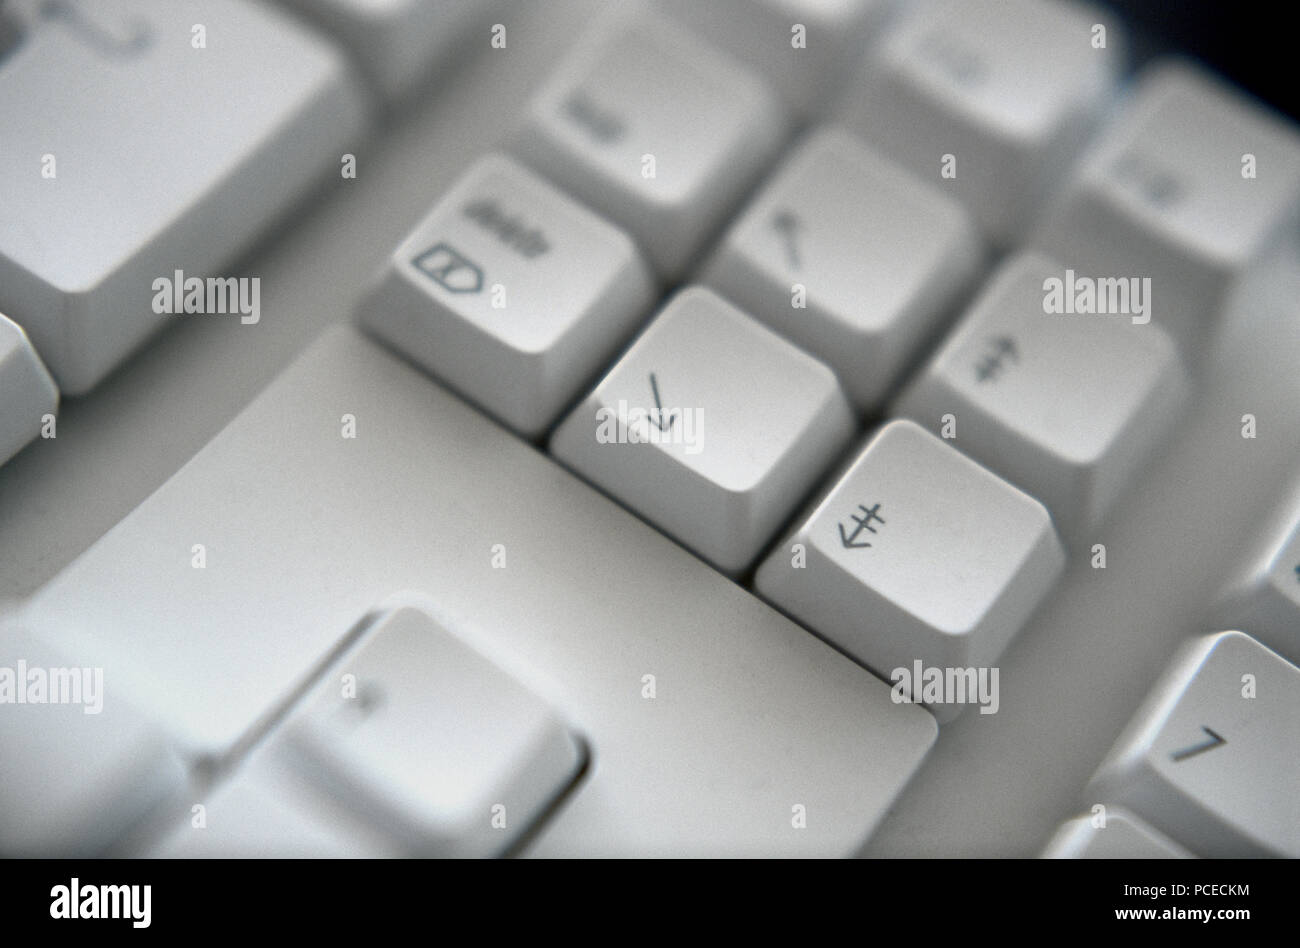 Apple iMac G5 computer keyboard Stock Photo